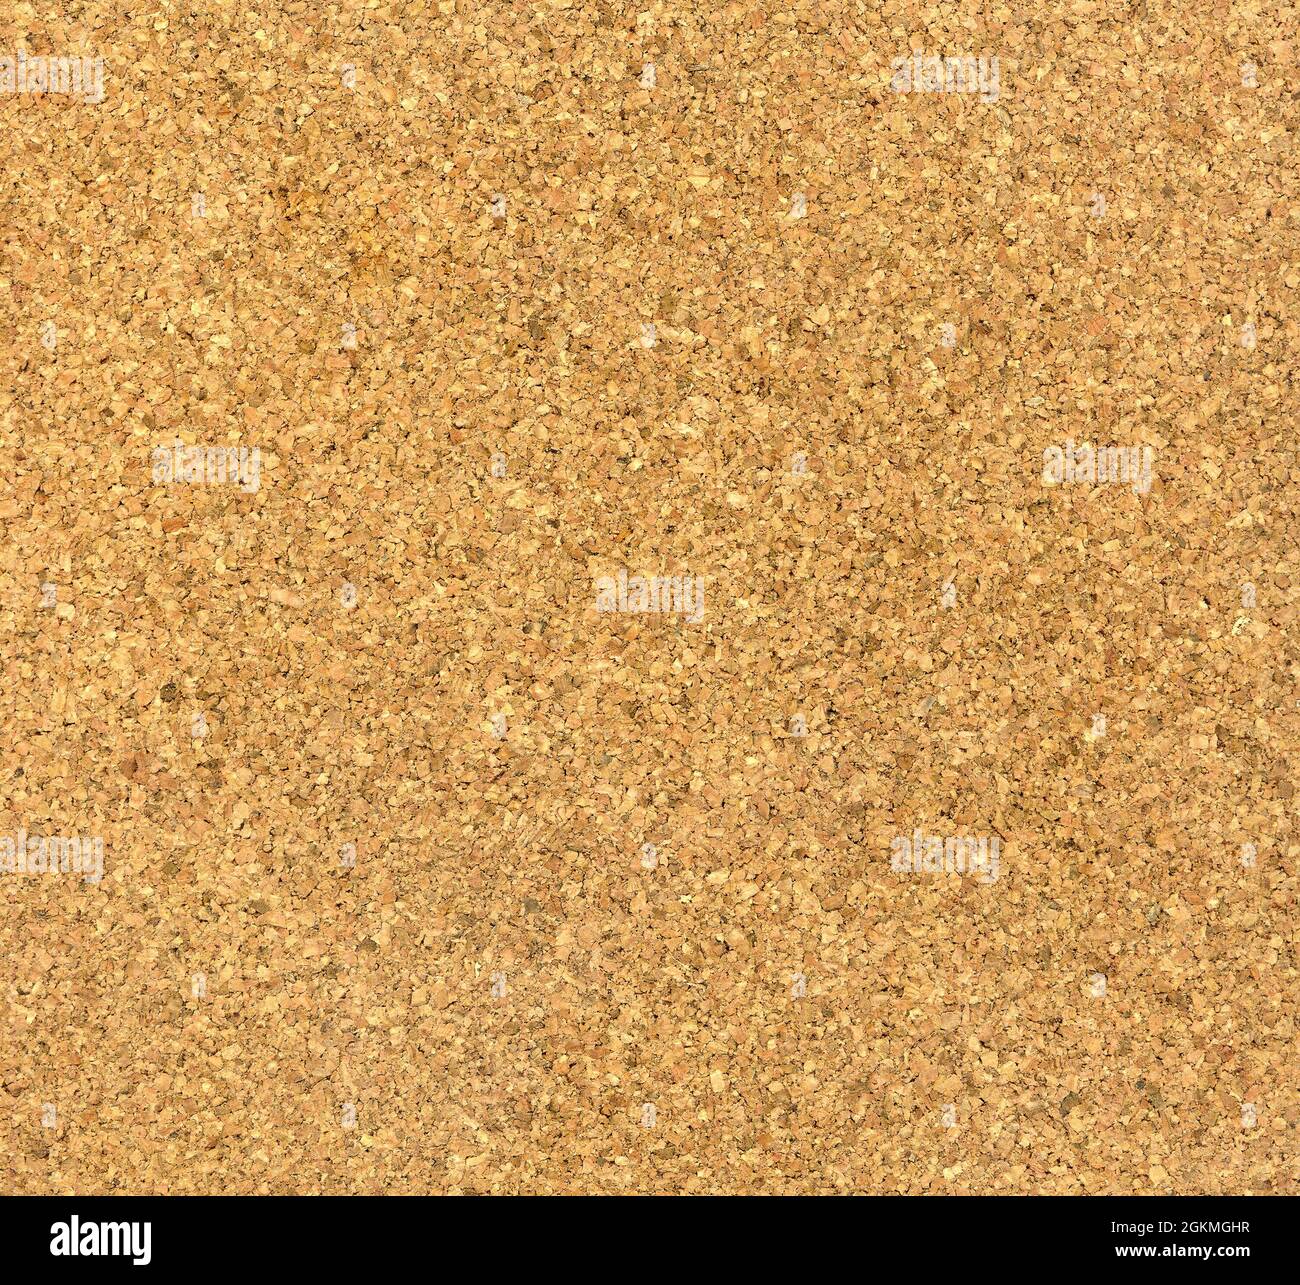 Brown cork board blank background texture closeup. Stock Photo